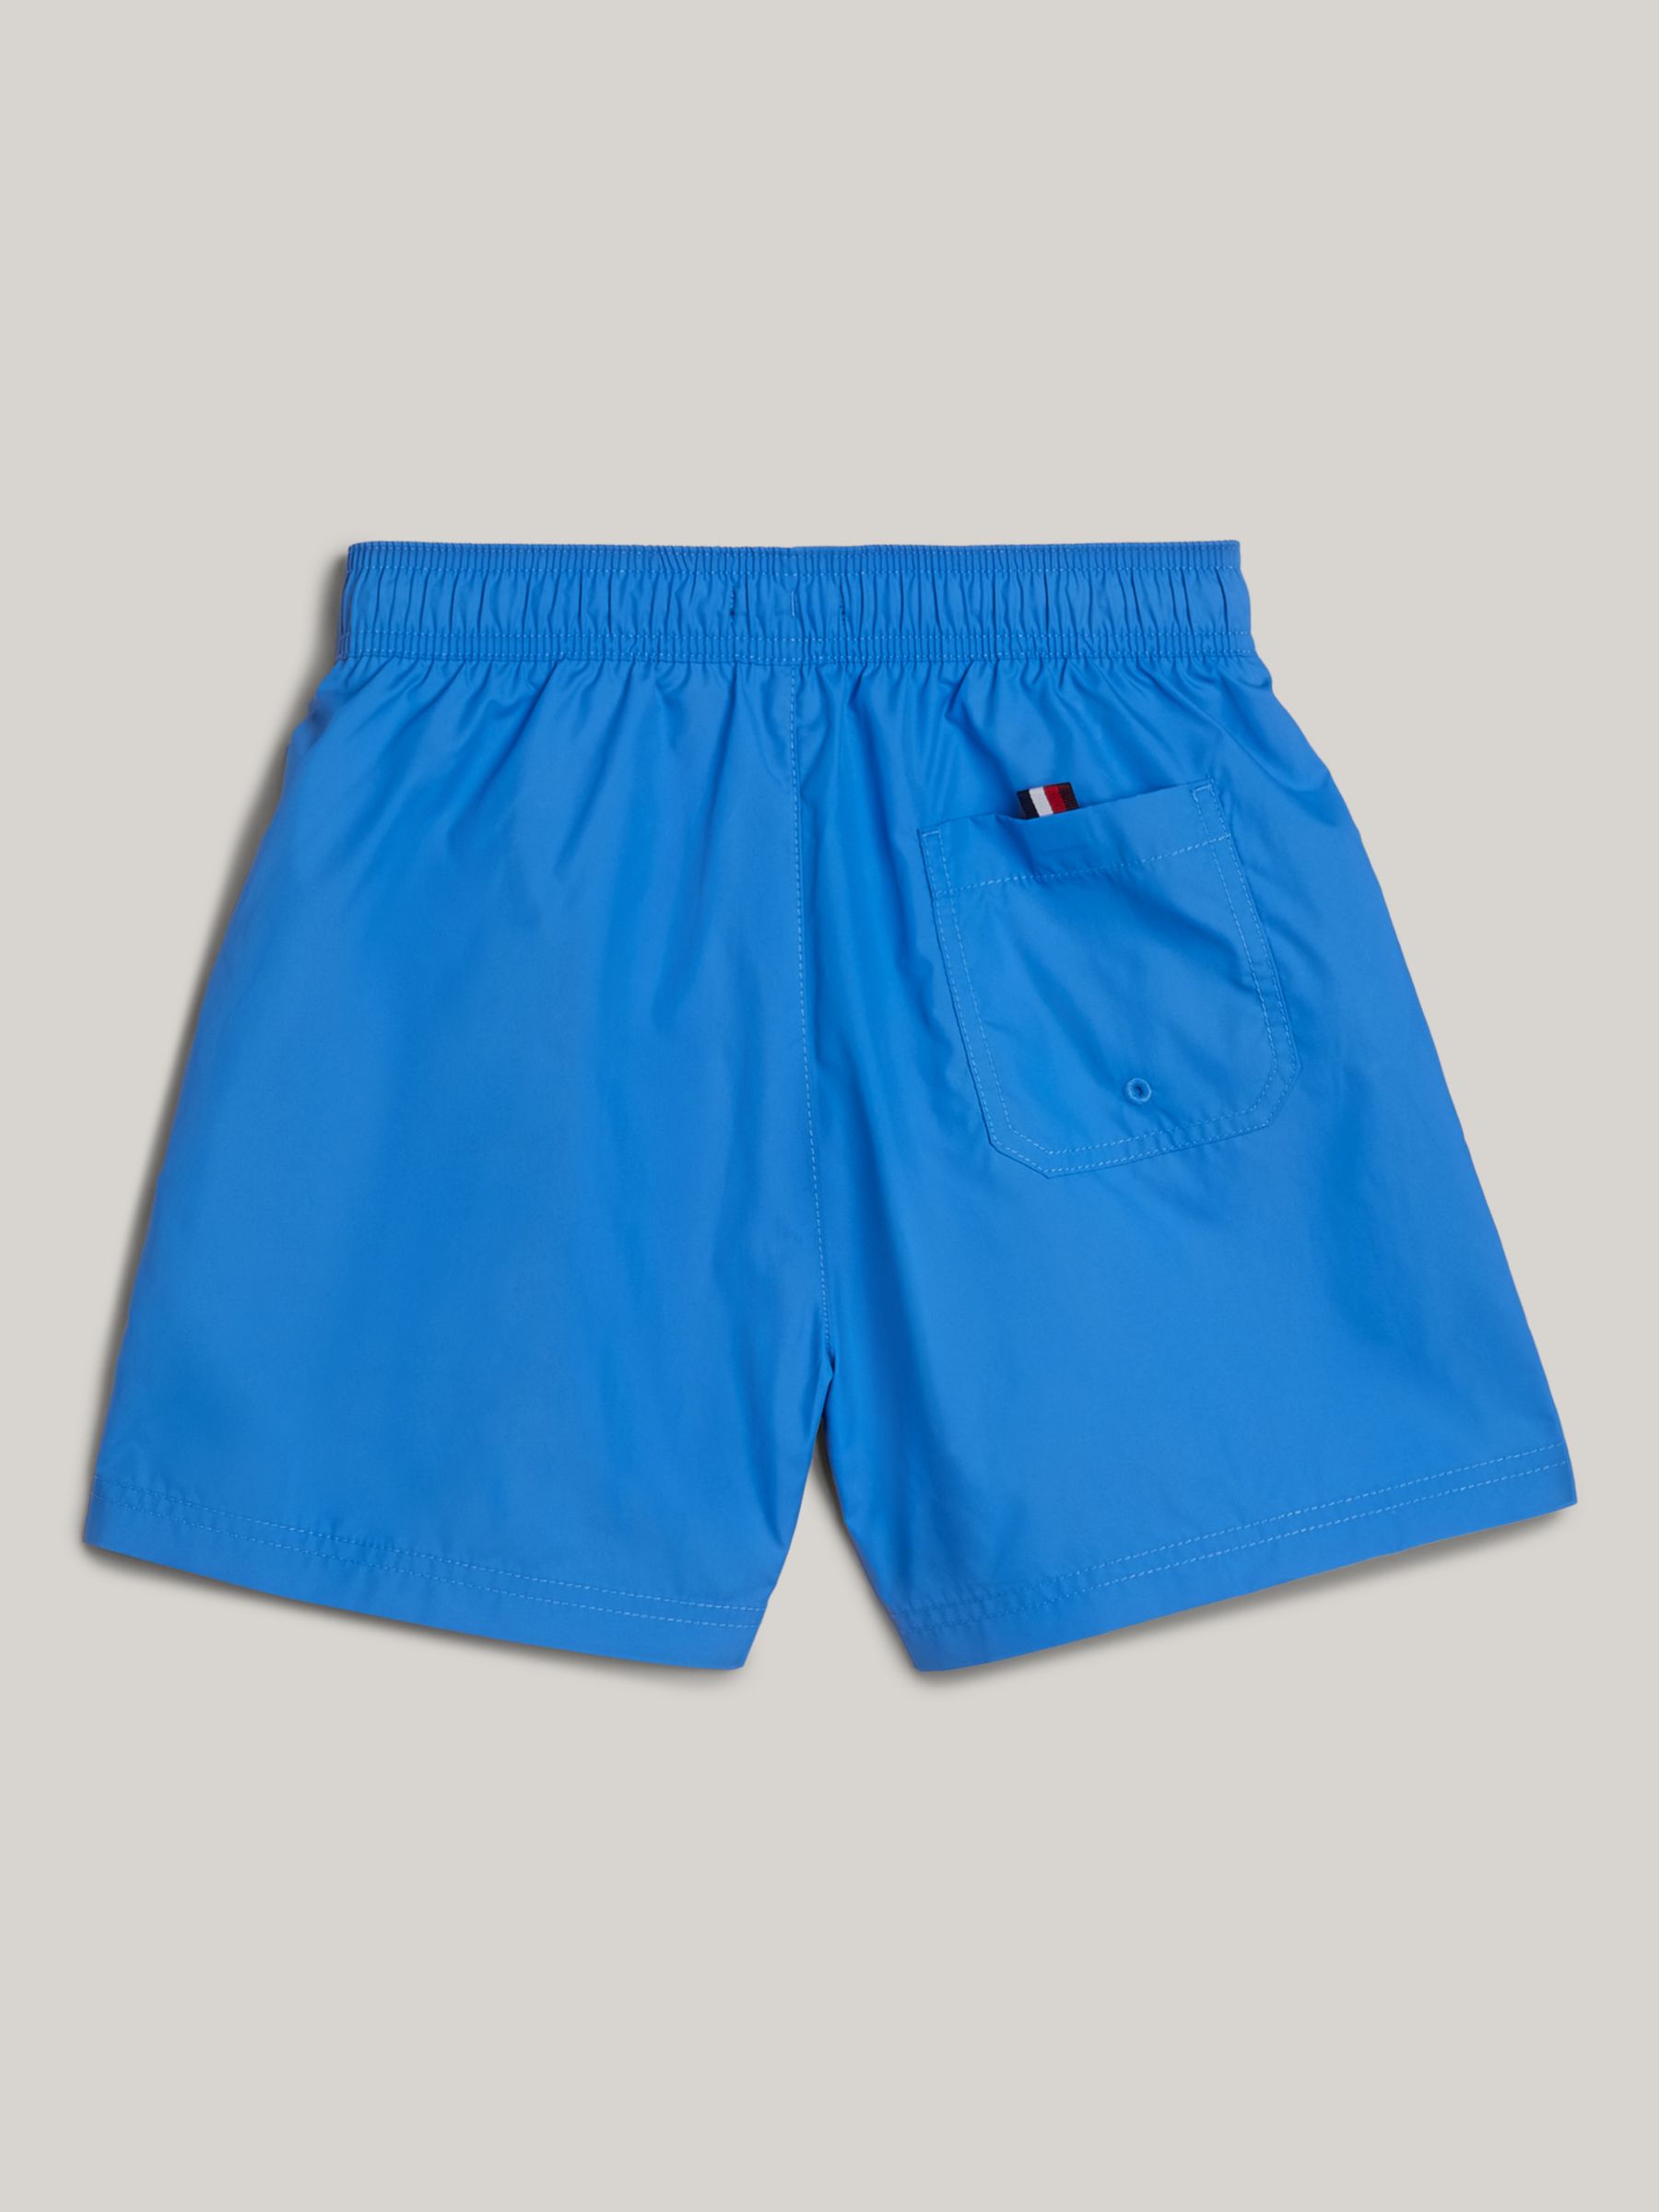 Tommy Hilfiger Kids' Logo Medium Swim Shorts, Blue Spell, 10-12 years